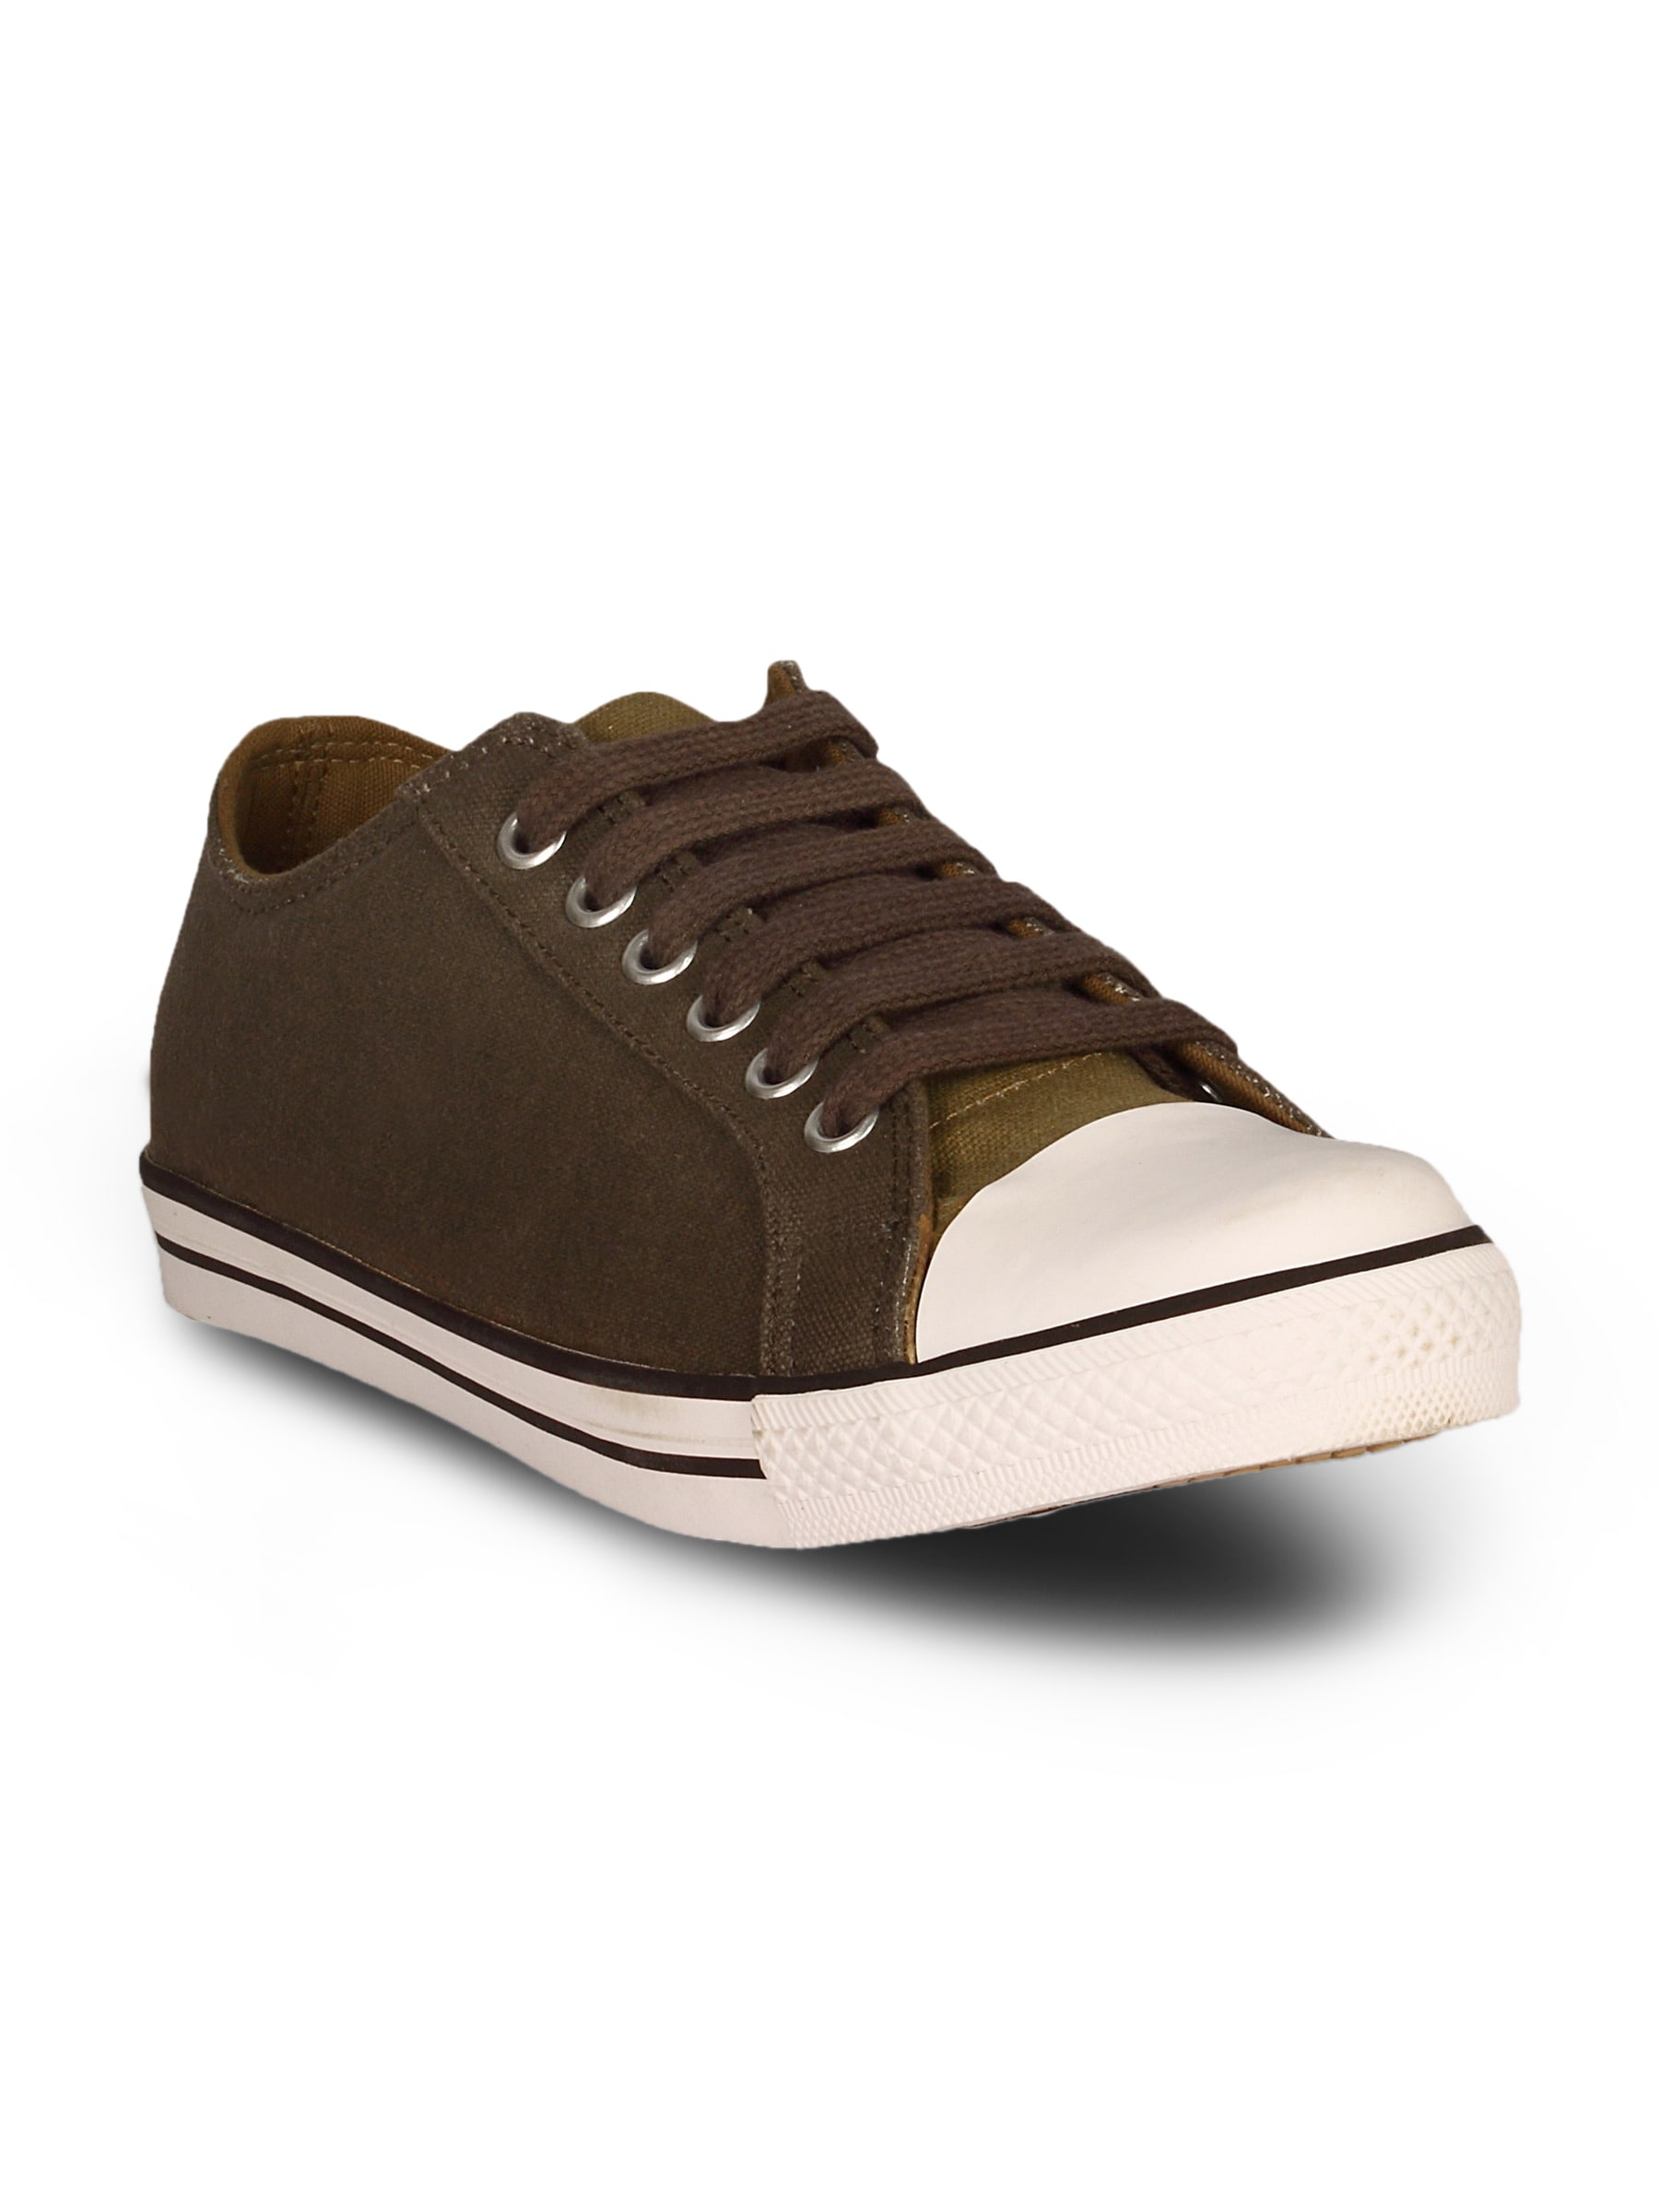 ADIDAS Men's Brown Color Canvas Shoe